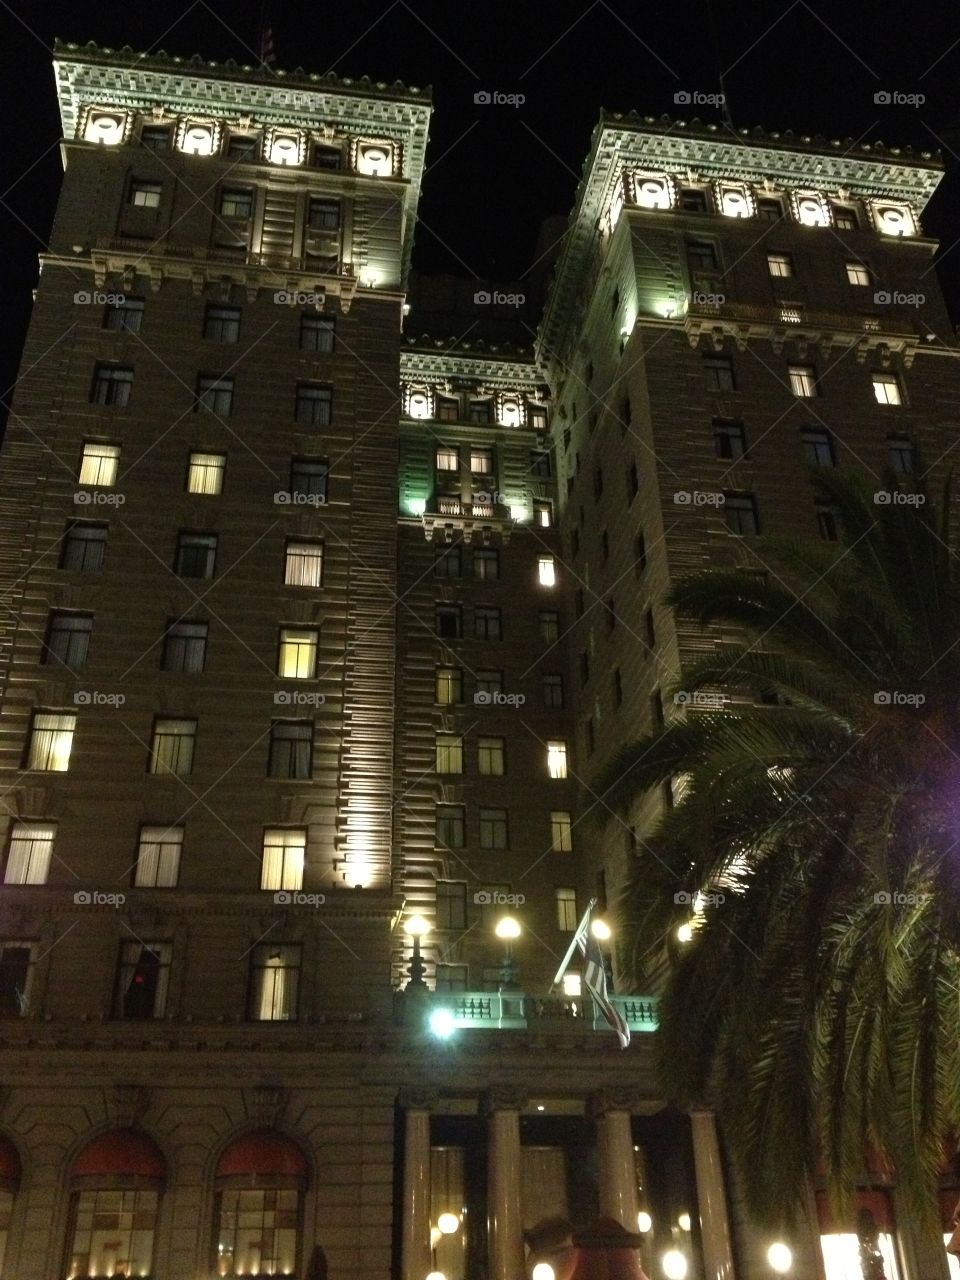 San Francisco Hotel